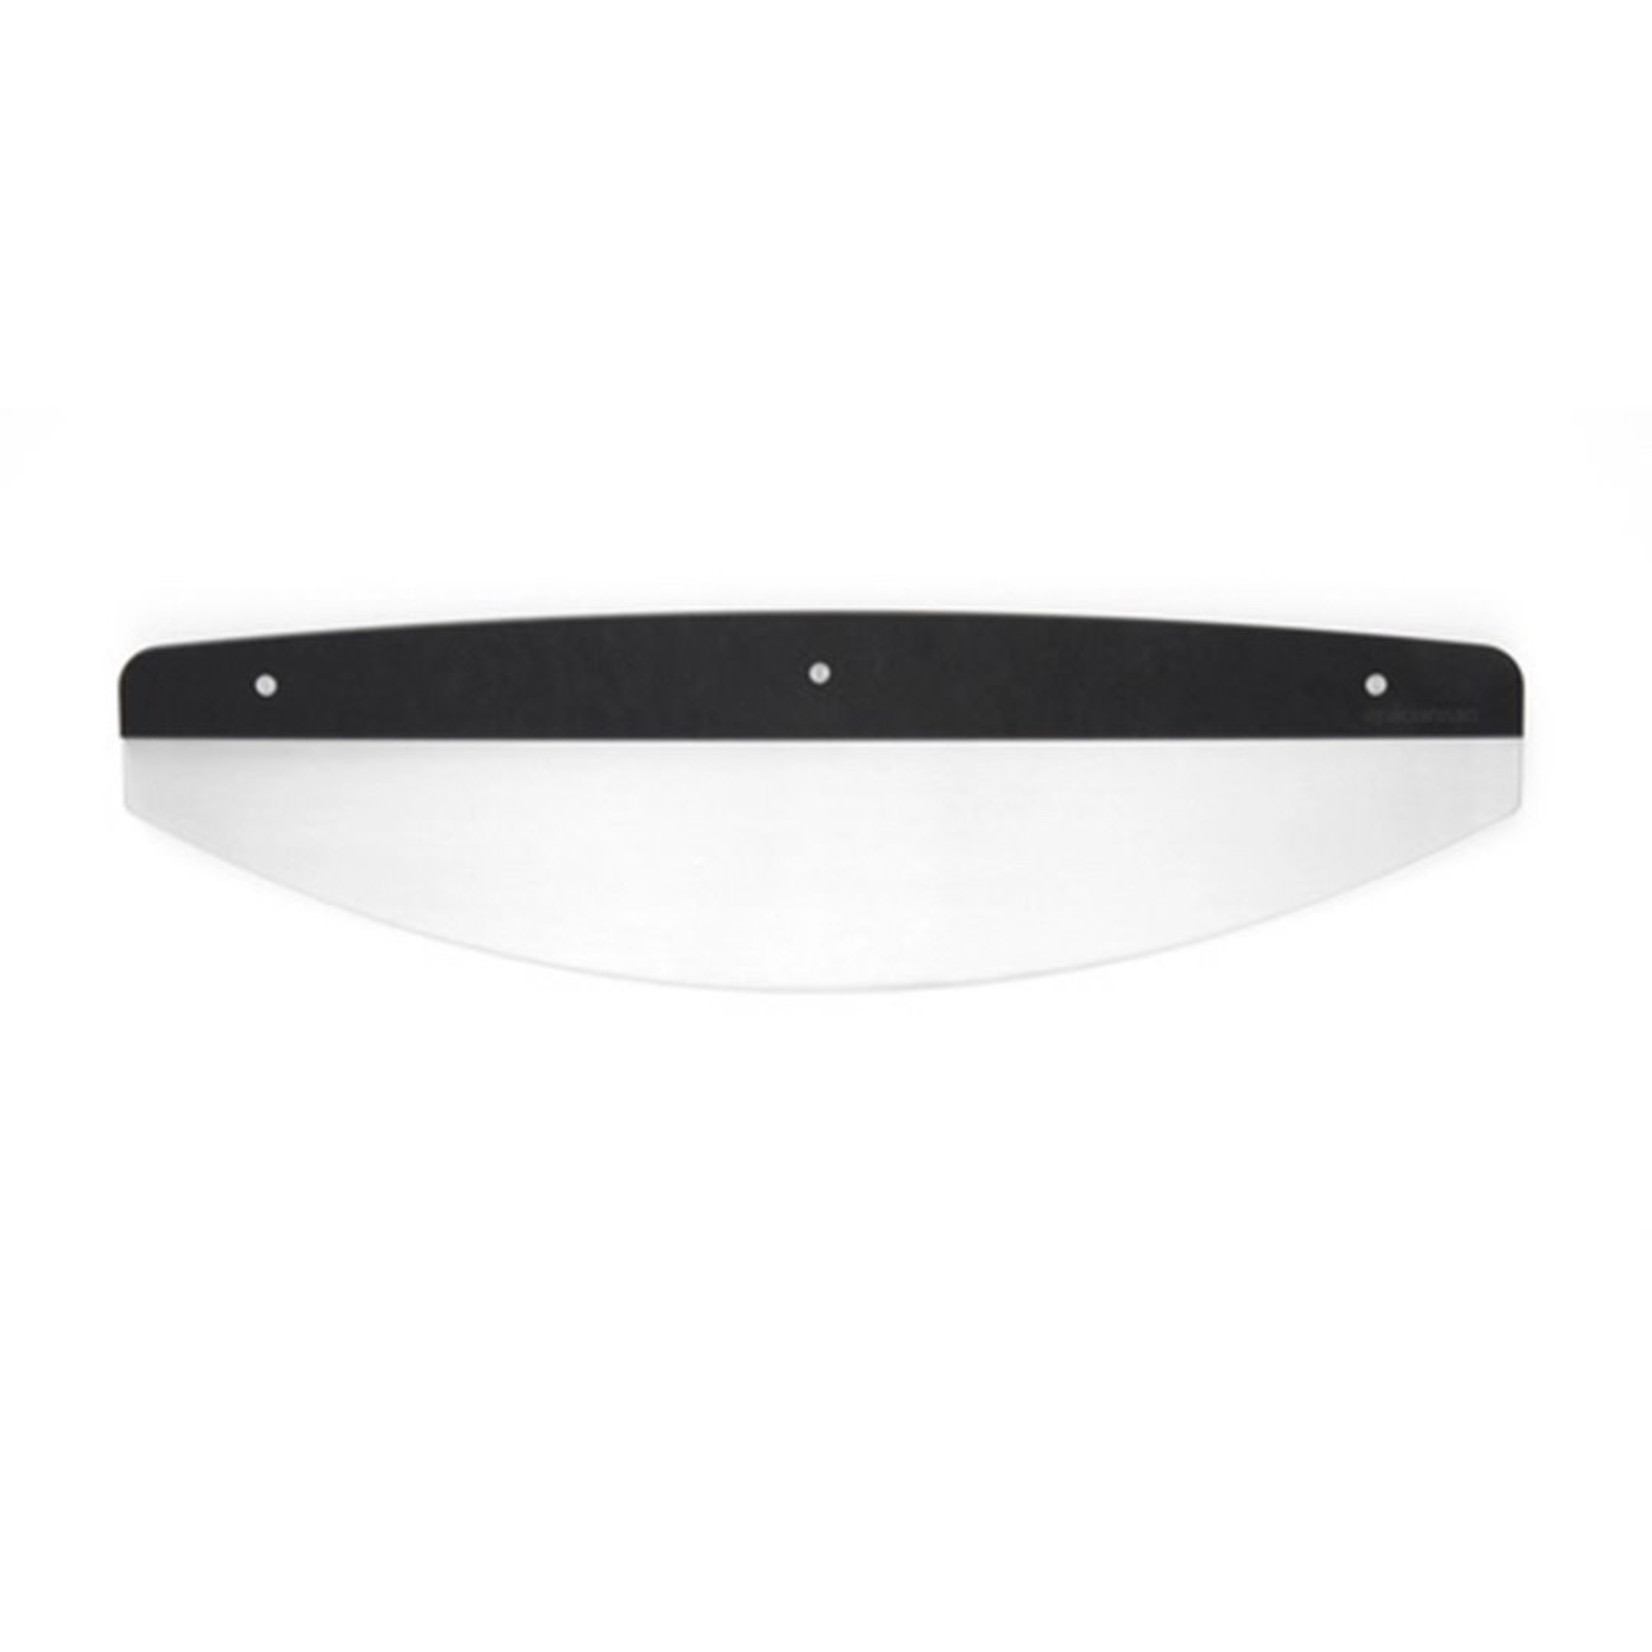 Epicurean Stainless Steel Pizza Cutters - 16.25 x 4.5 - Slate/Black